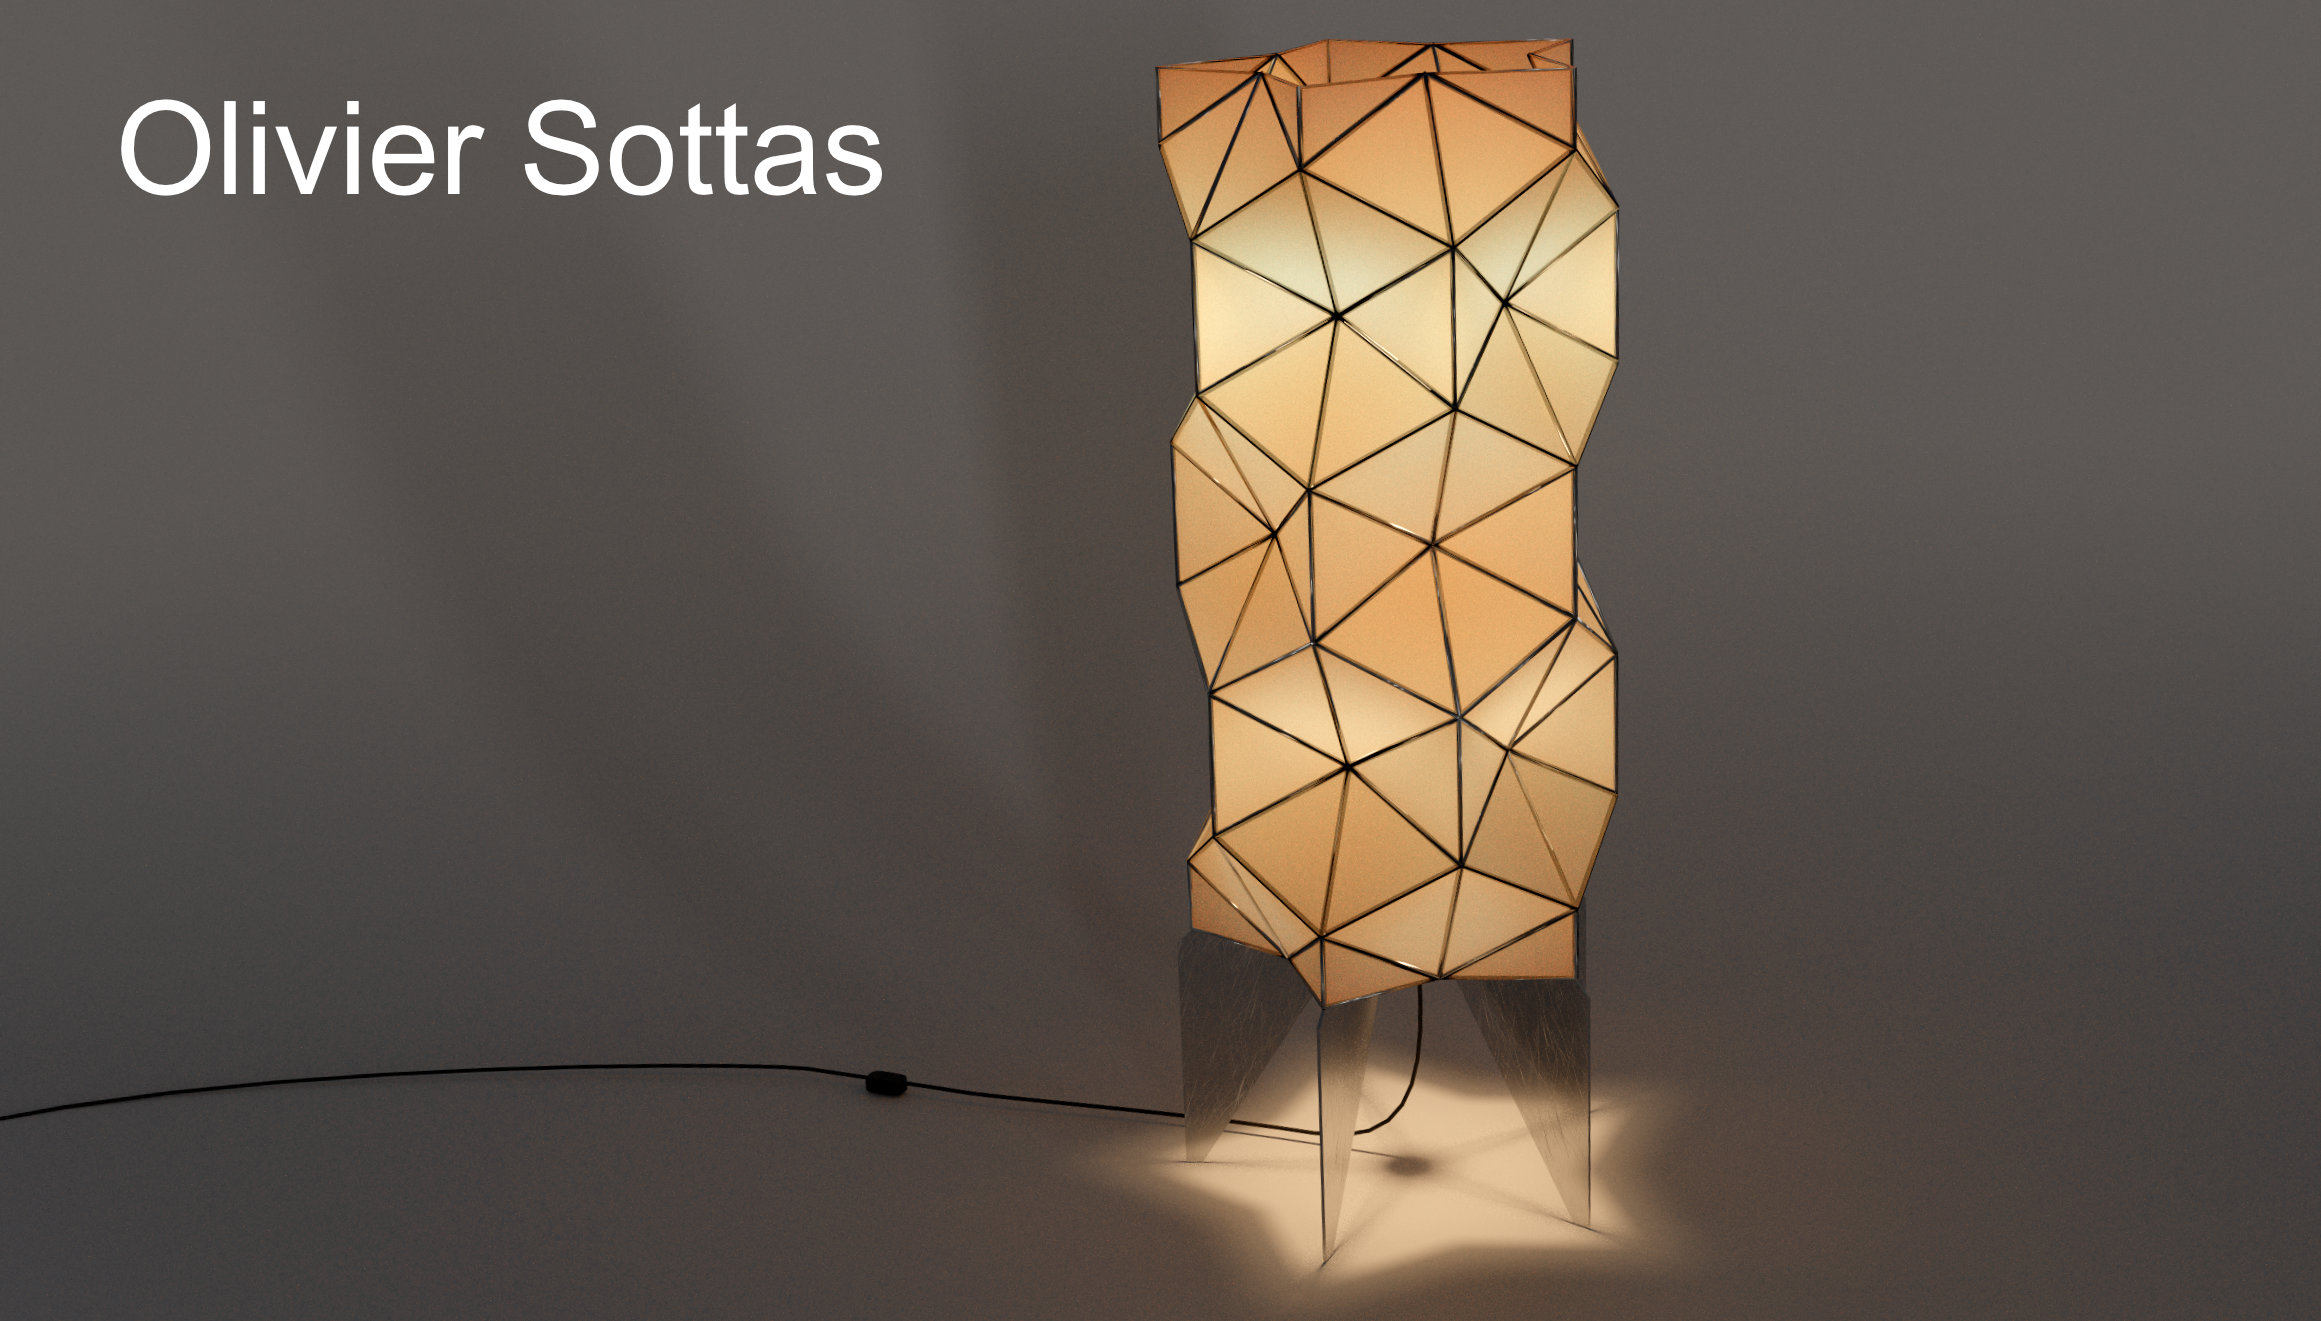 3d virtual rendering of a lamp